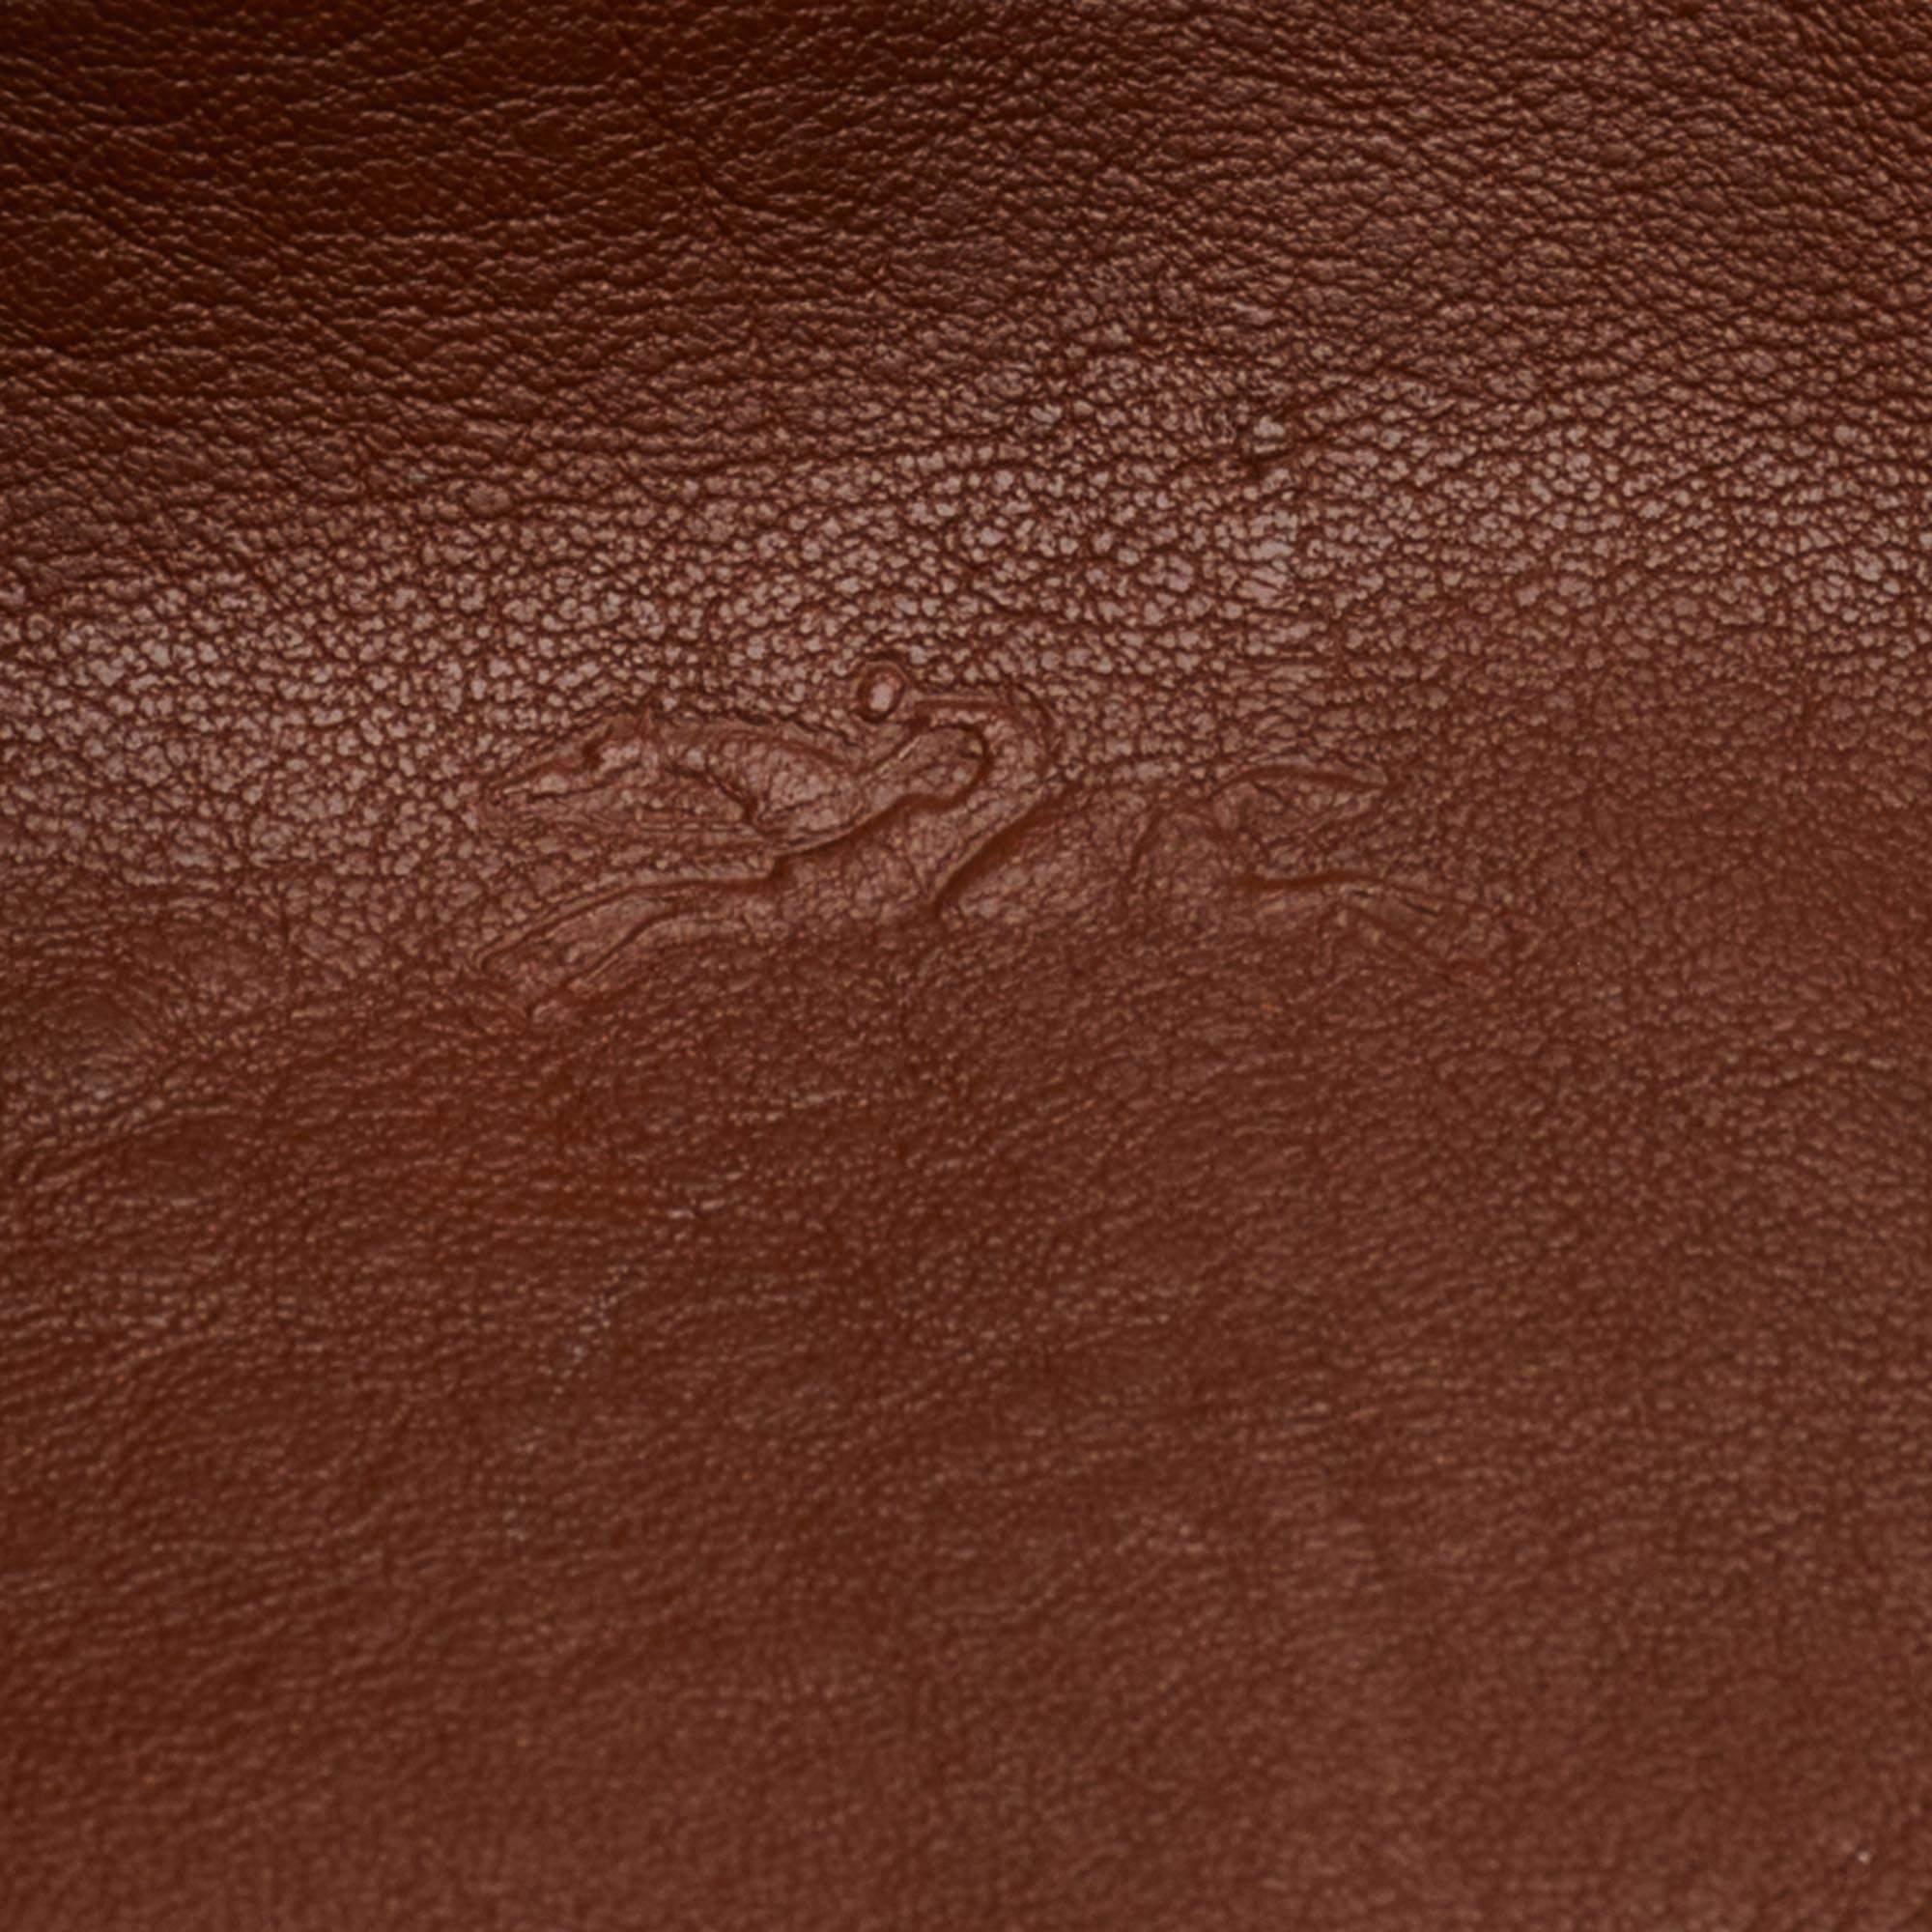 Longchamp Mustard Leather Large 3d Shopper Tote 6